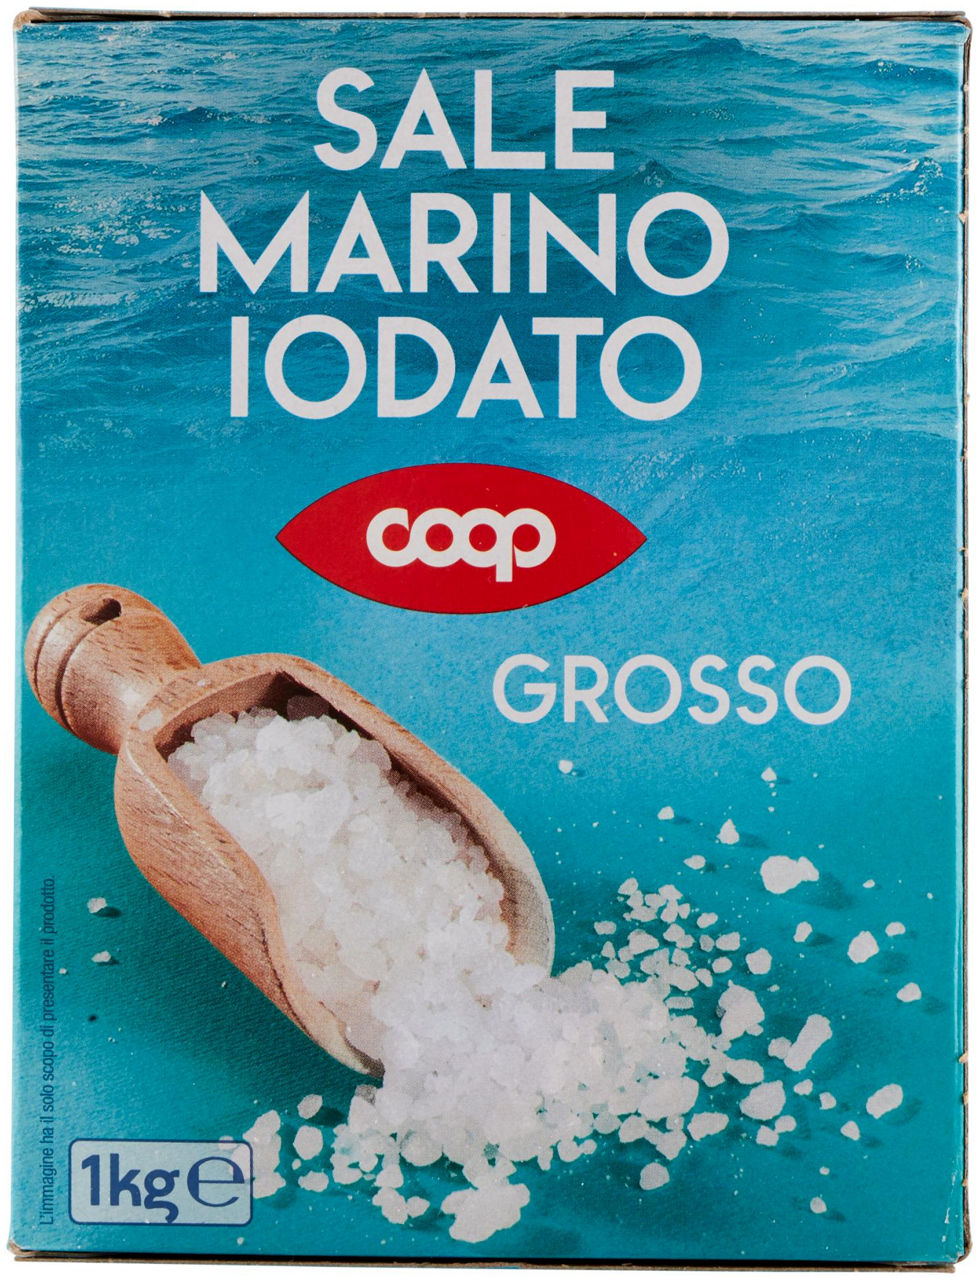 SALE IODATO MARINO GROSSO COOP SCATOLA KG.1 - 4